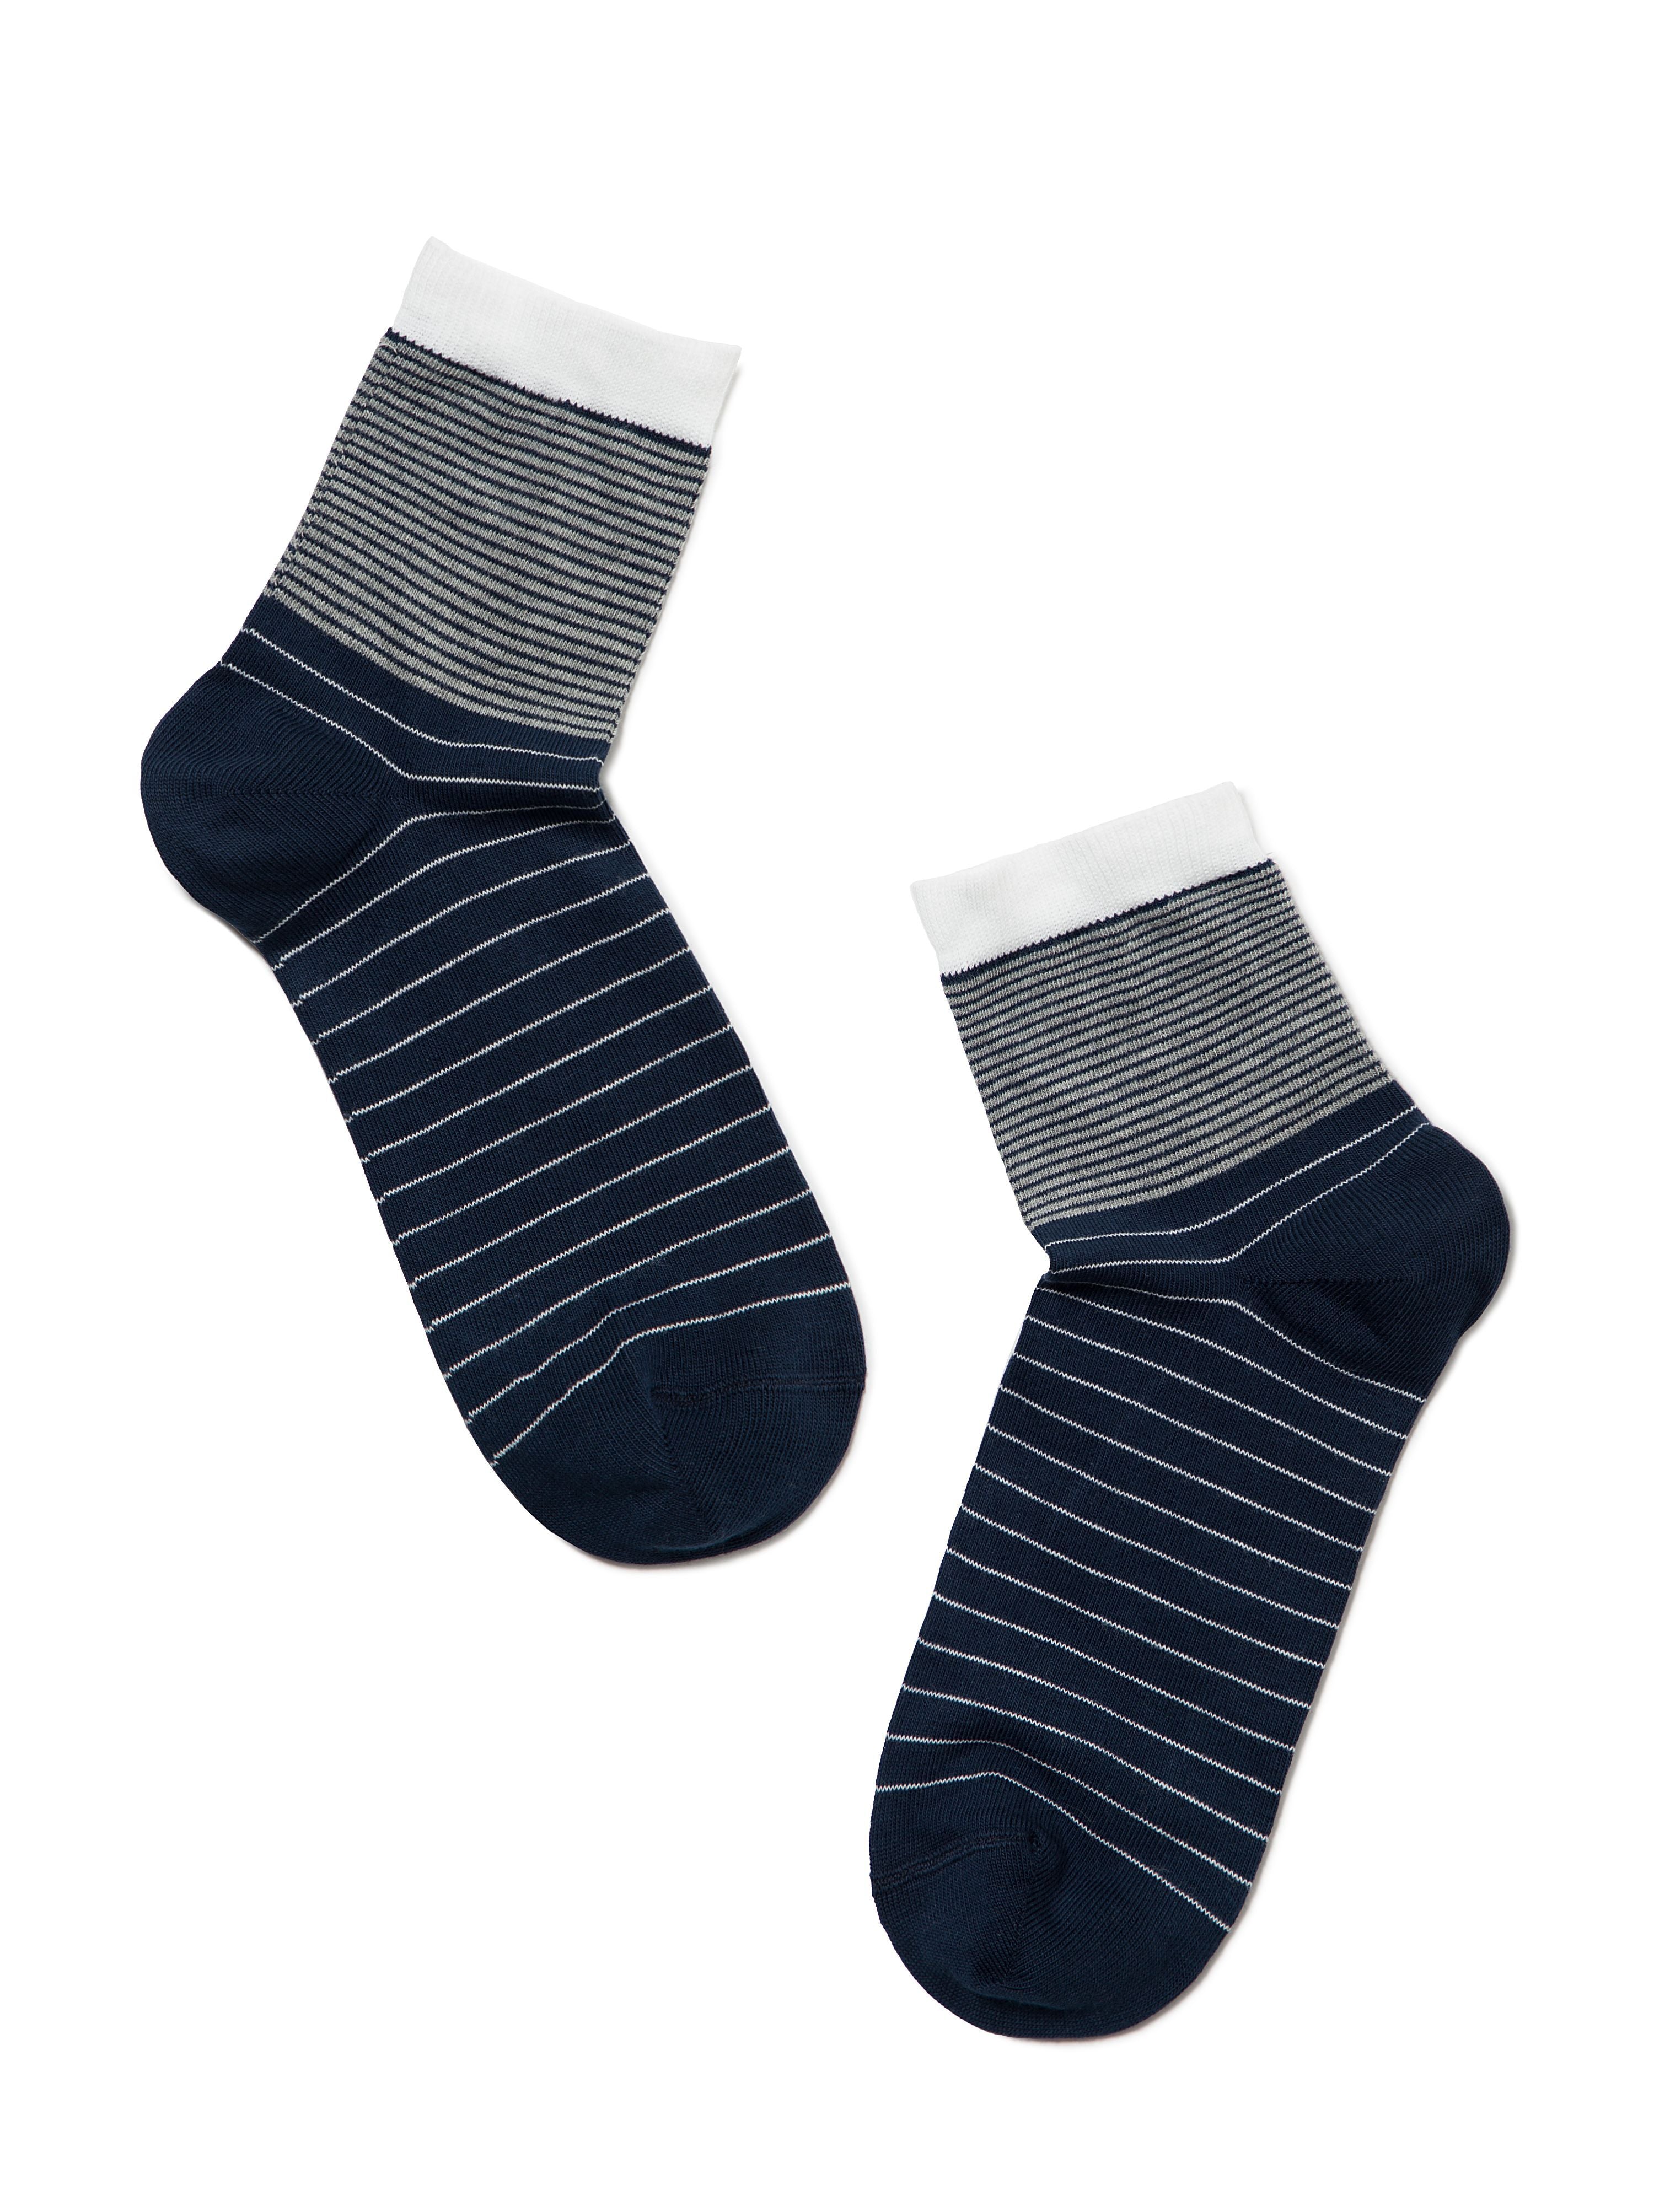 Women's blue striped socks by Conte Elegant. Blue socks with white stripes pattern